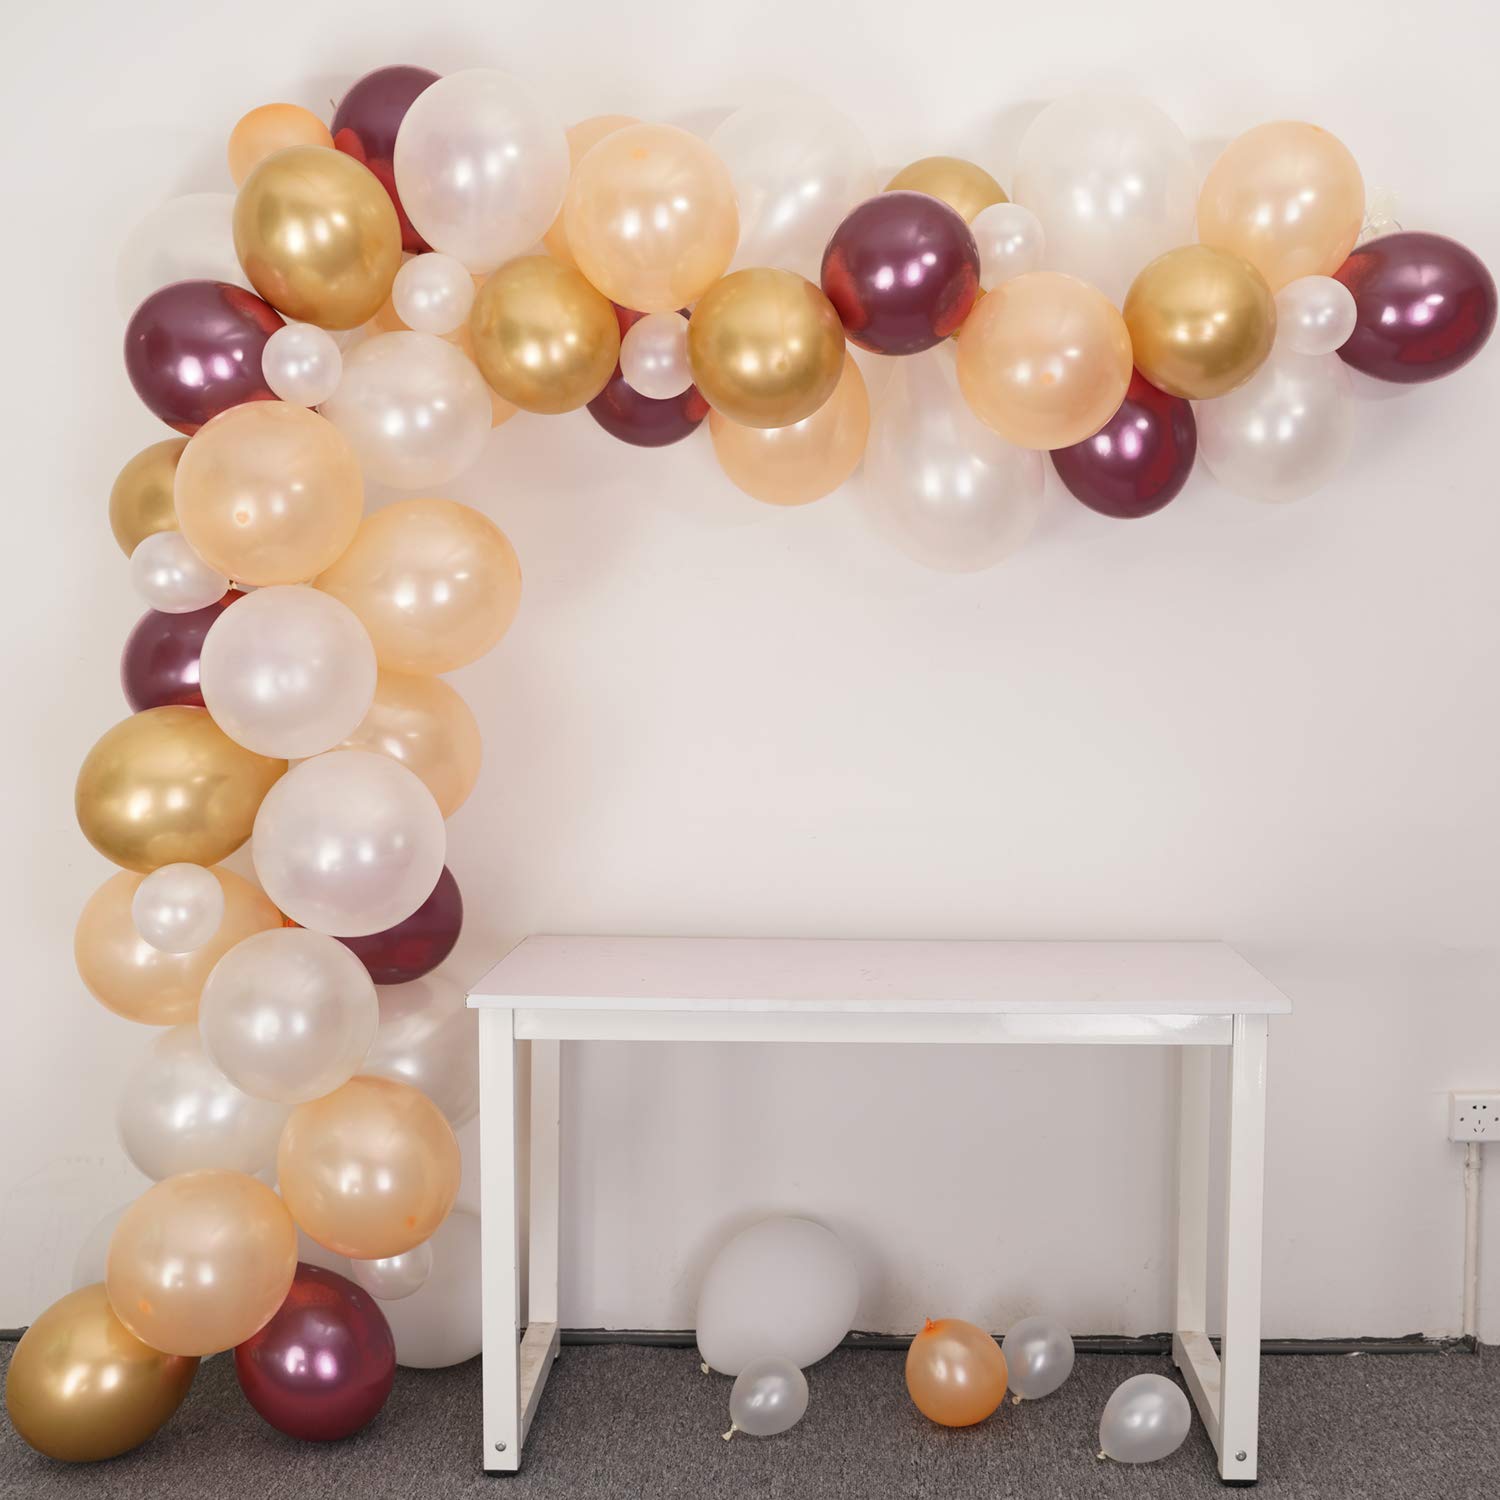 Ballongbåge i vinröd och metallic persika ballonger